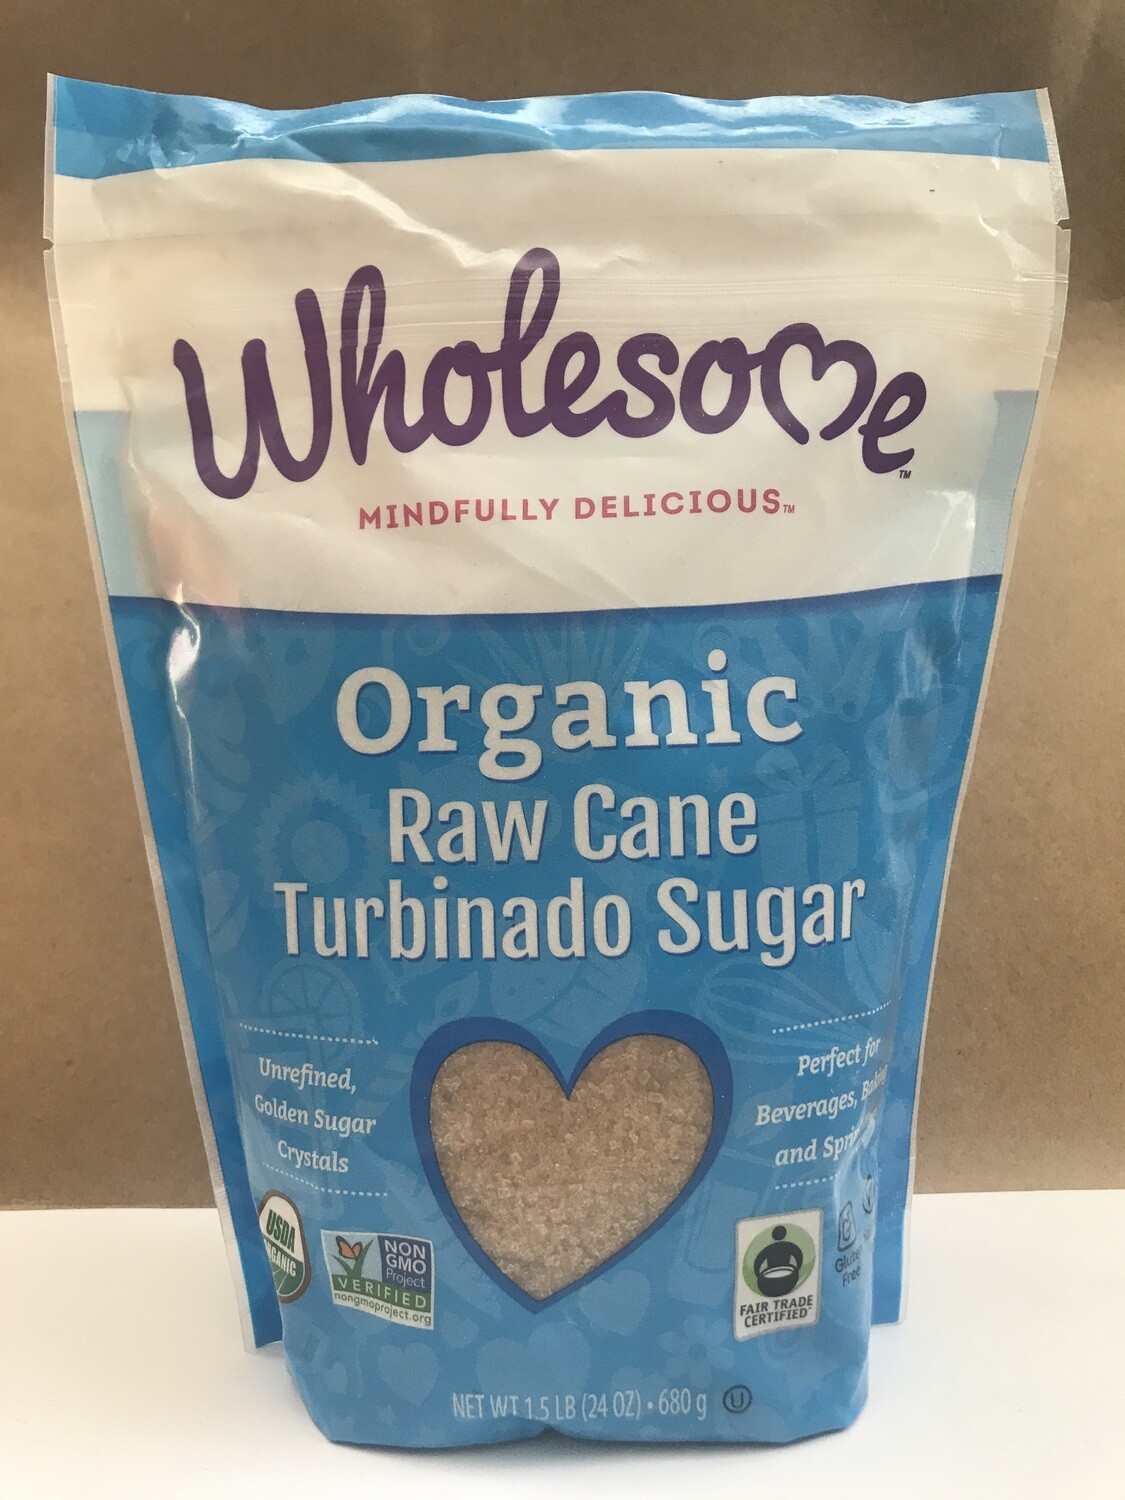 Grocery / Baking / Wholesome Turbinado Sugar